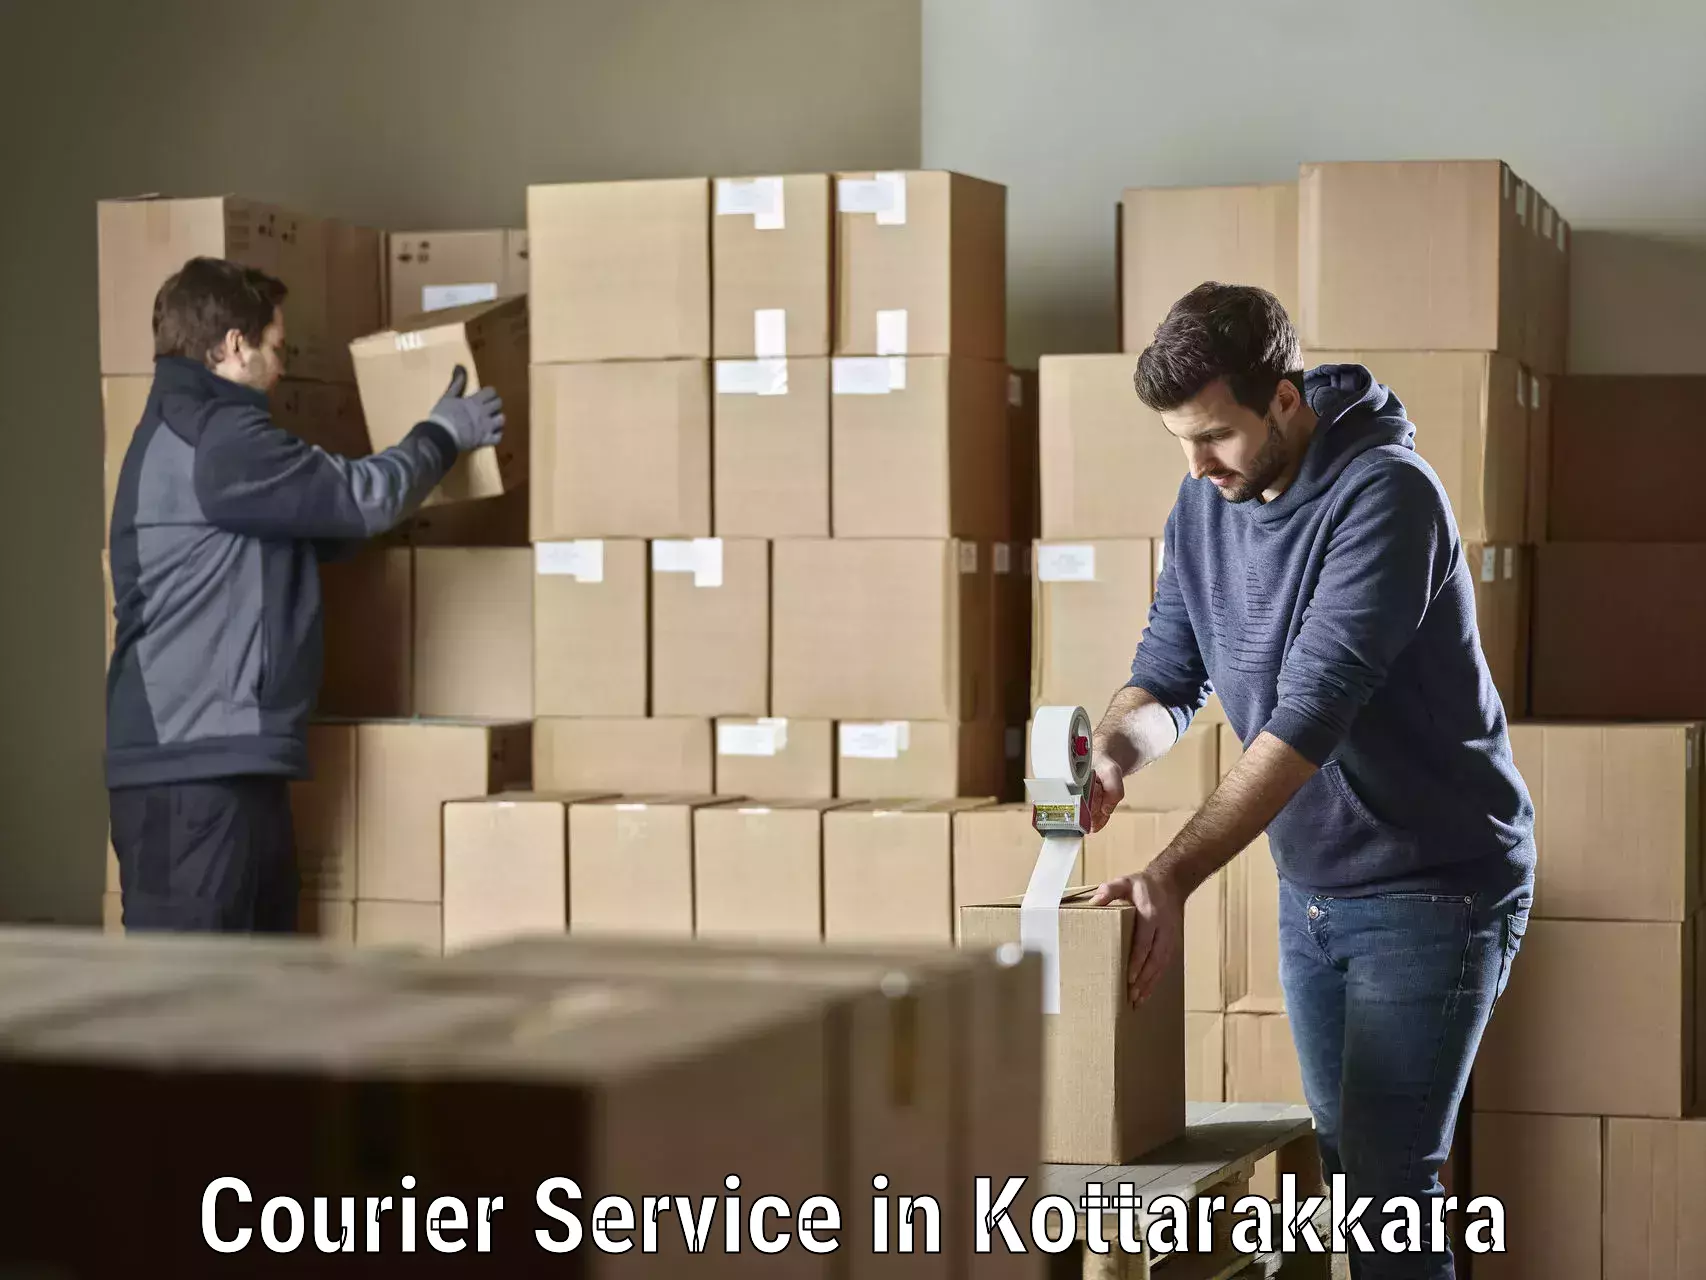 Courier service partnerships in Kottarakkara